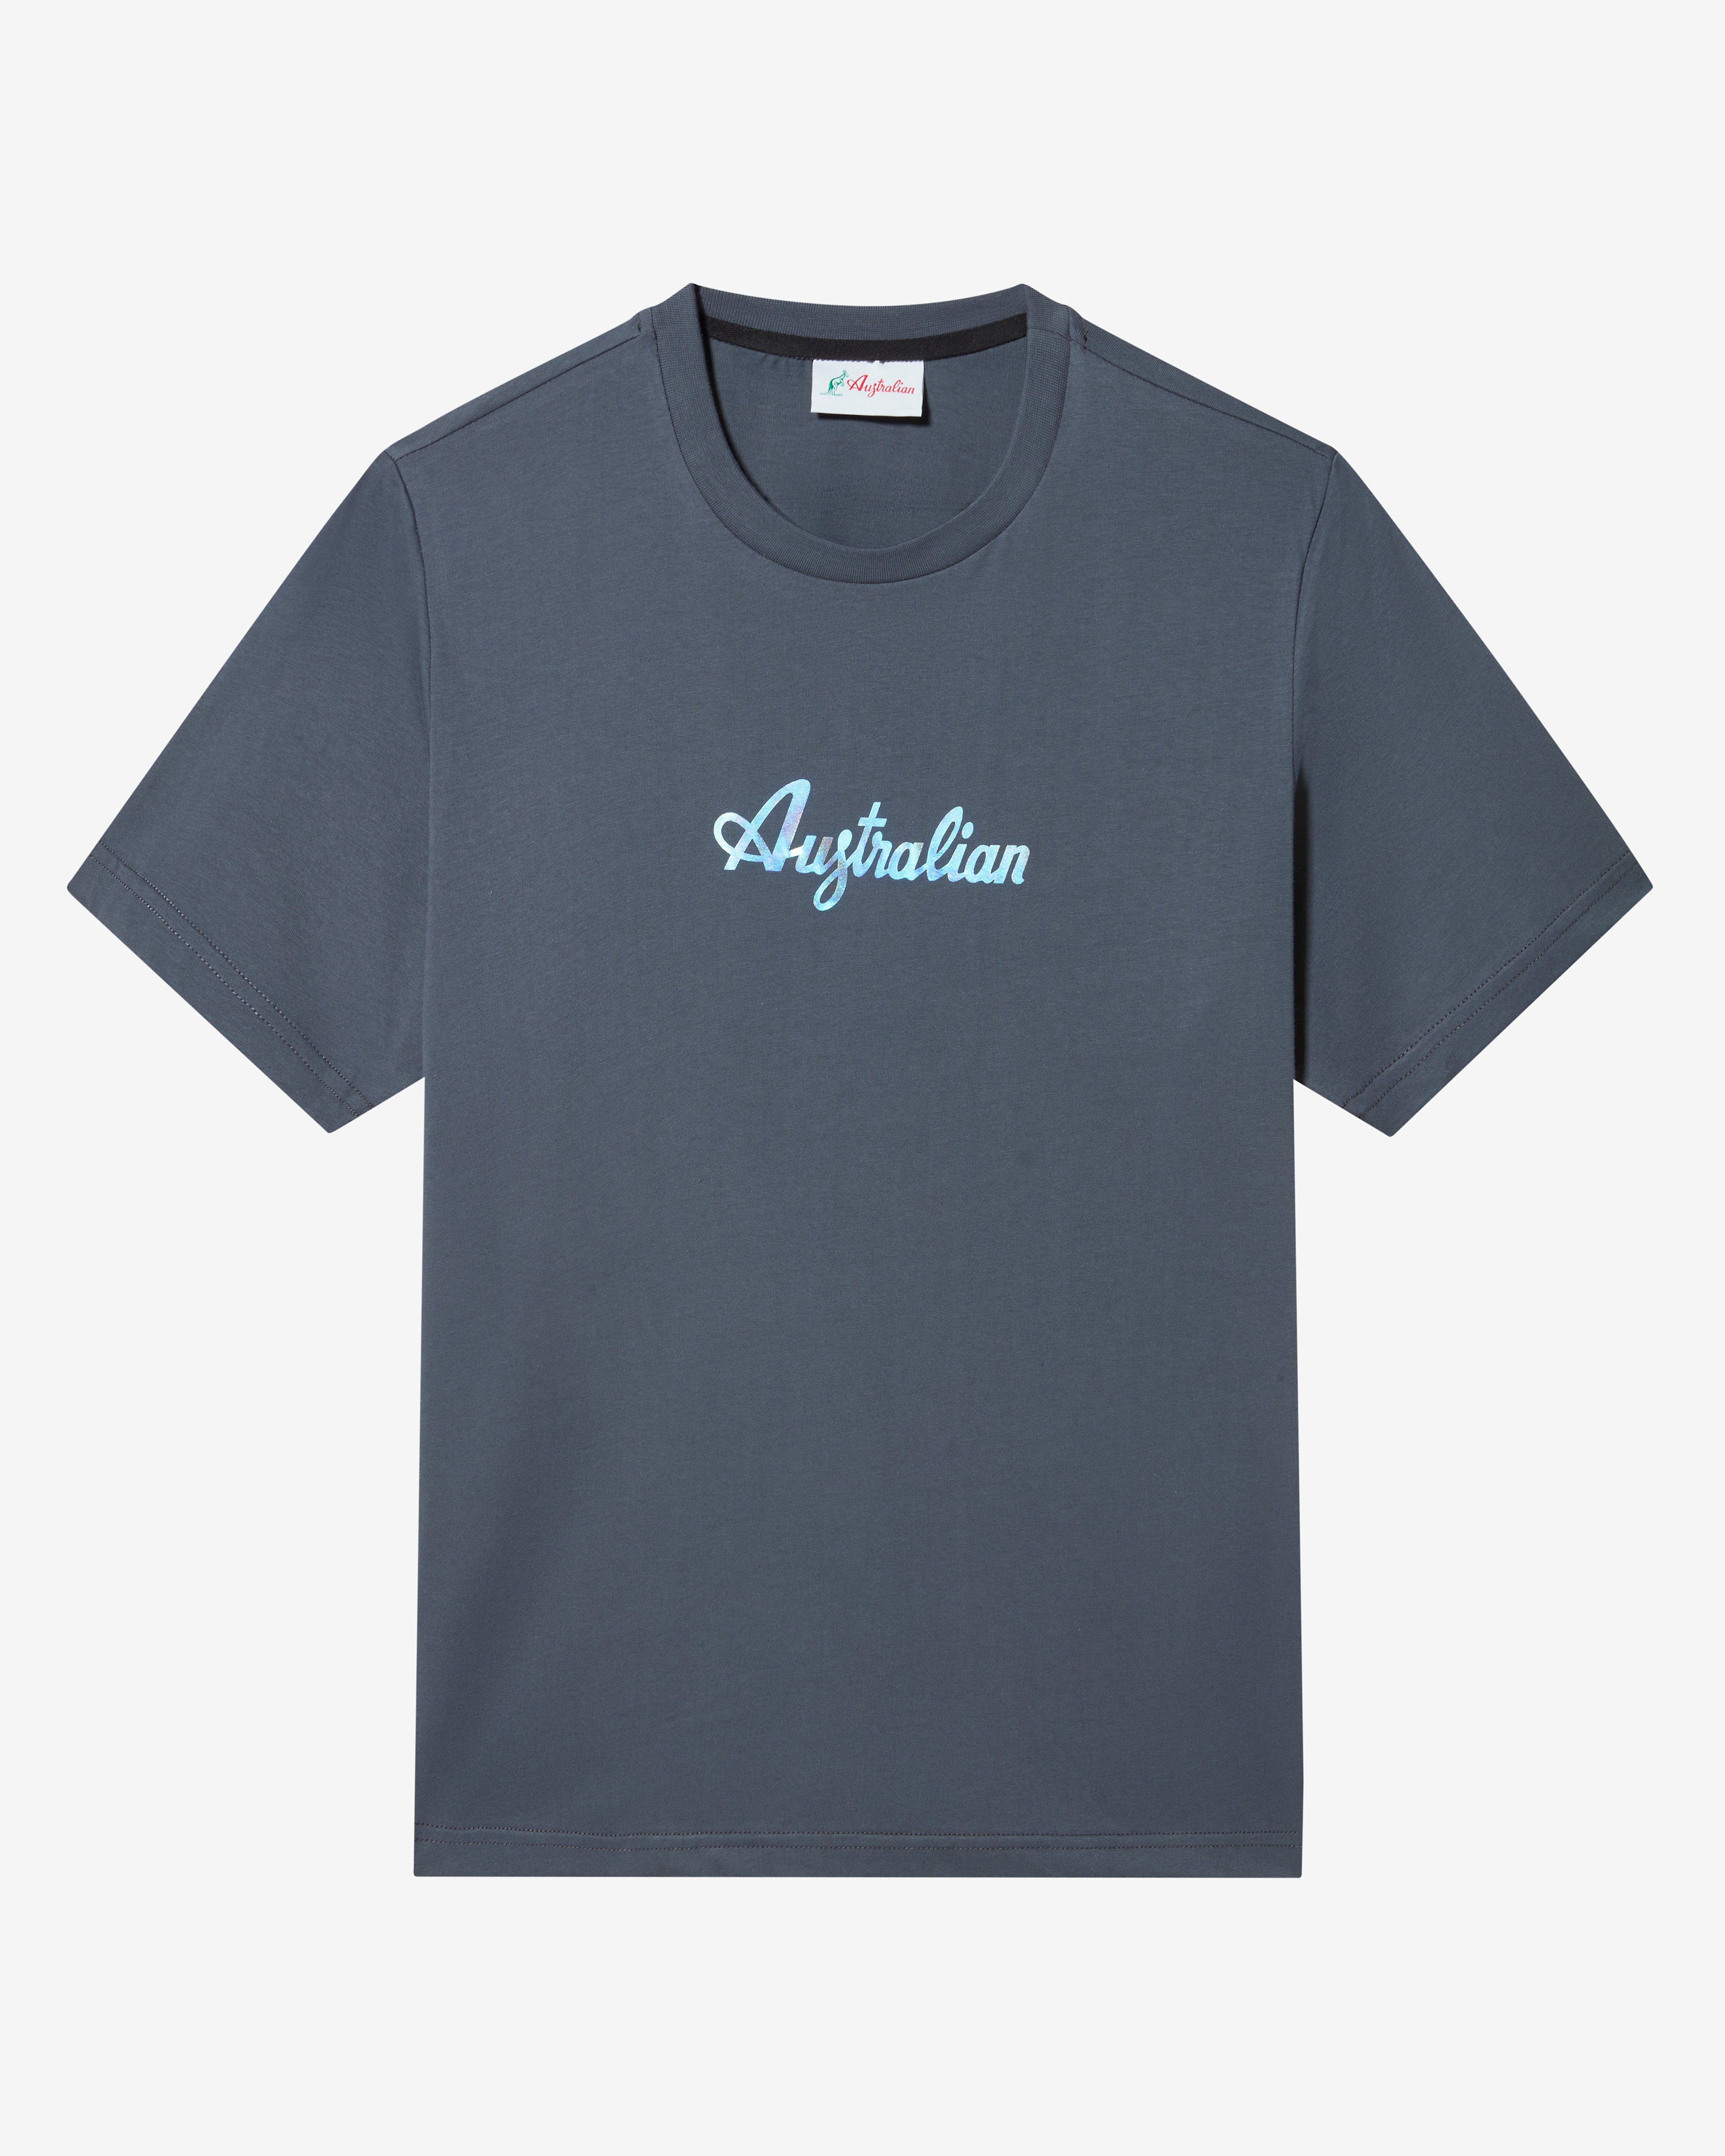 Urban T-shirt: Australian Sportswear